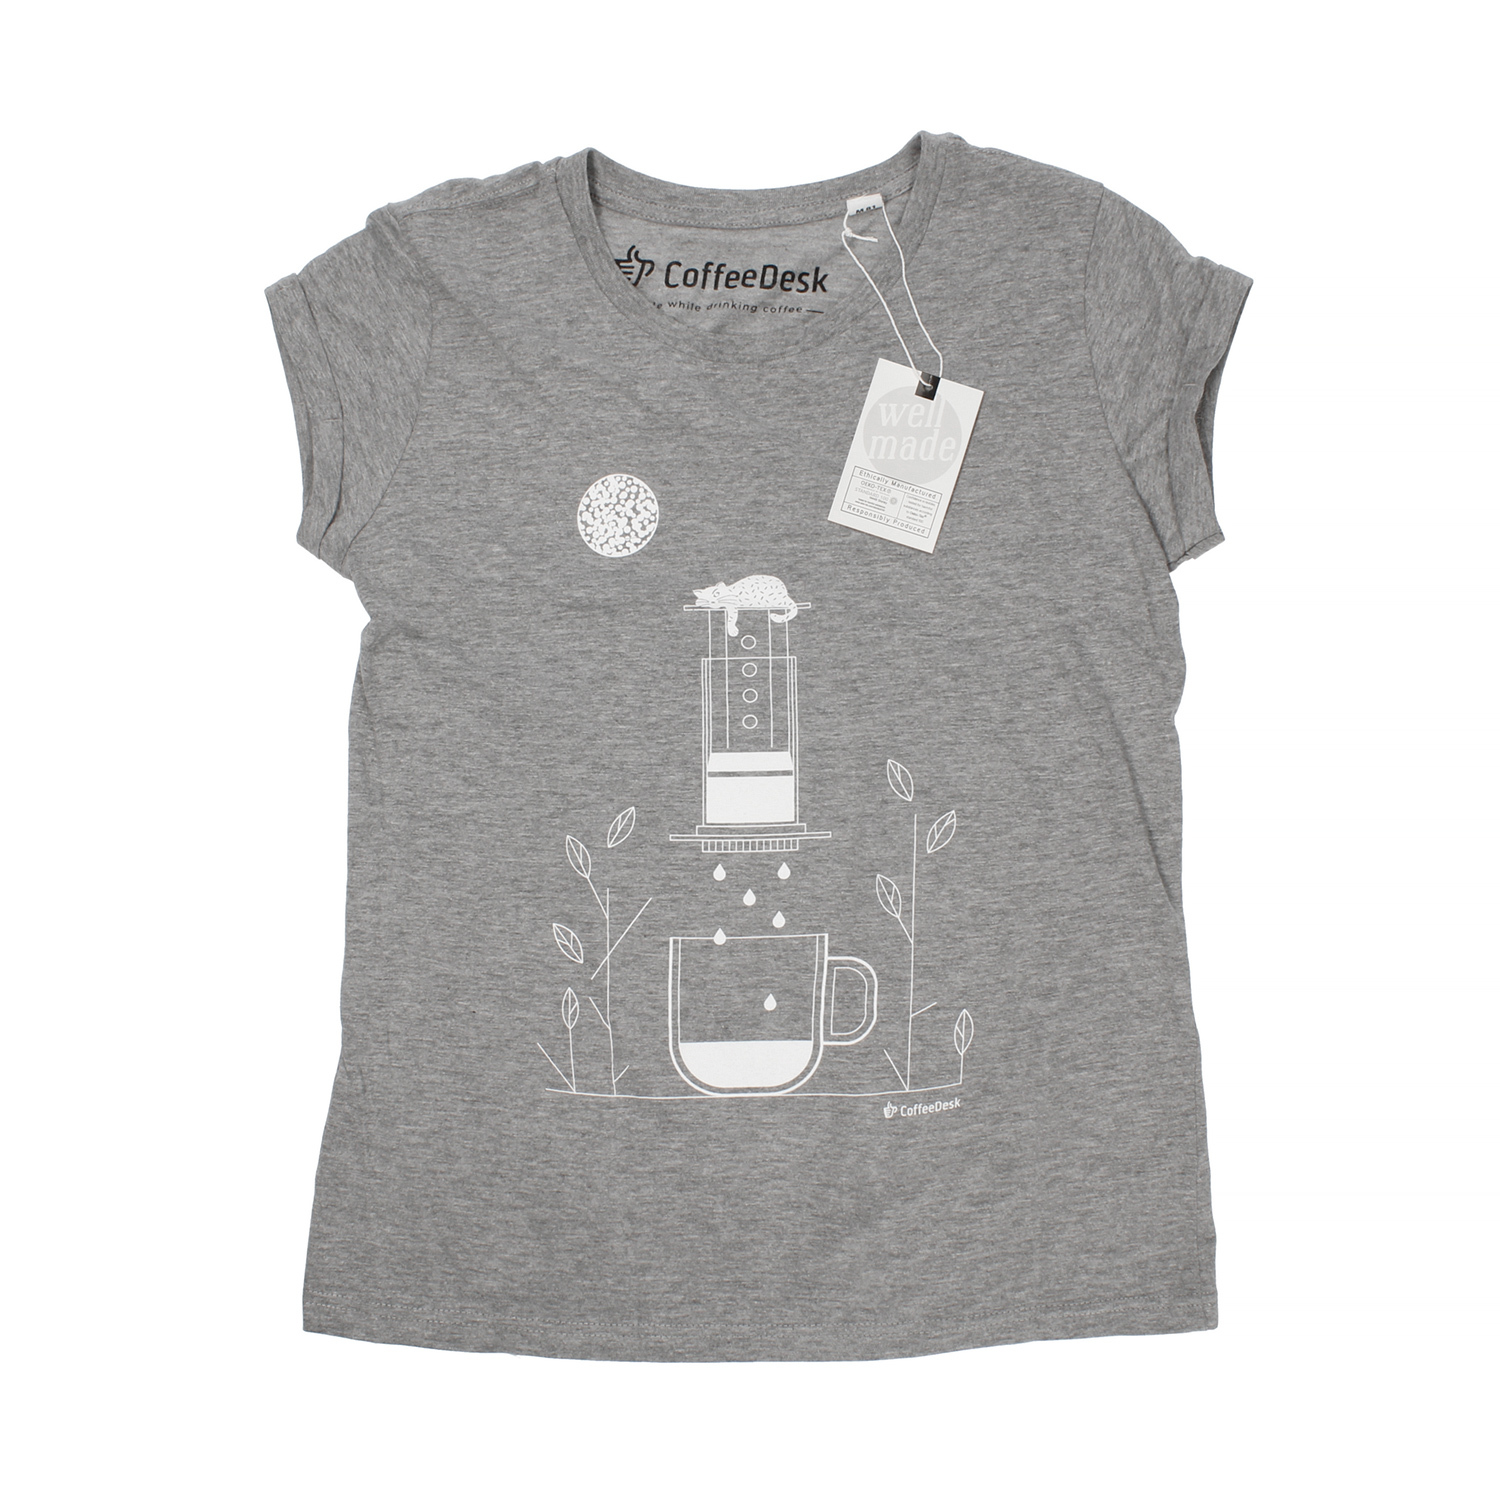 Coffeedesk AeroPress Women's Grey T-shirt - L